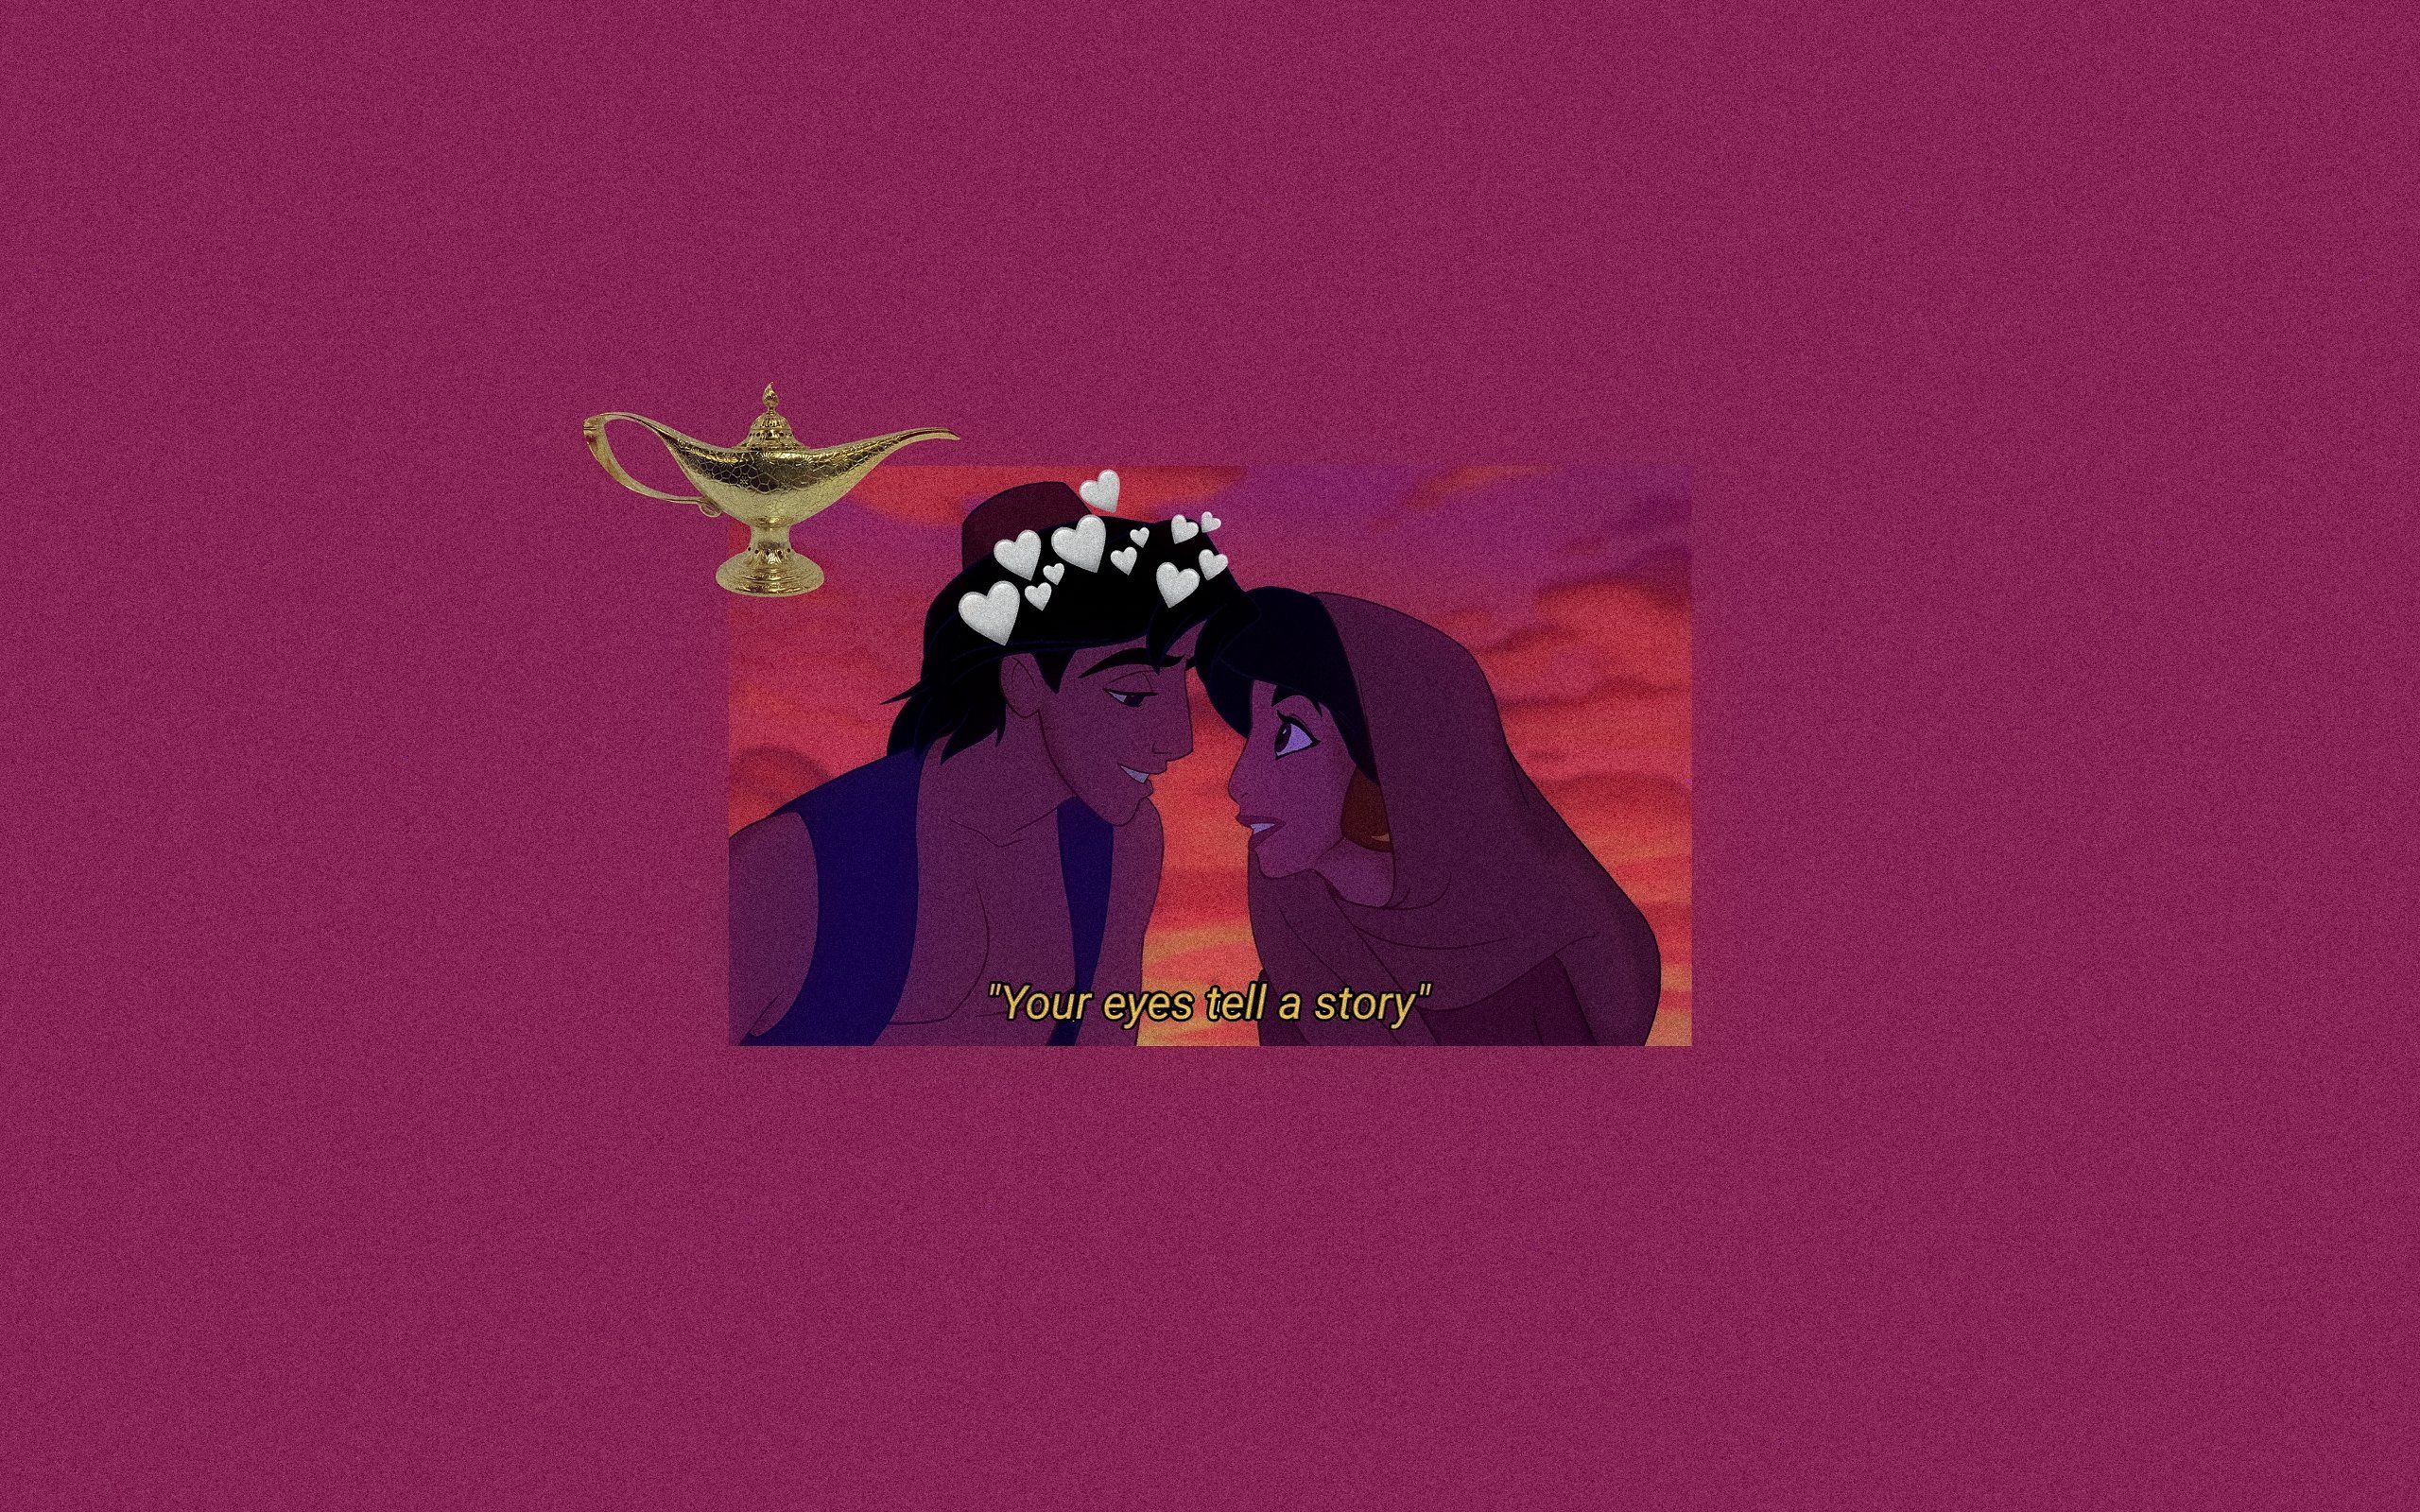 Wallpaper of aladdin and jasmine from the disney movie aladdin - Mulan